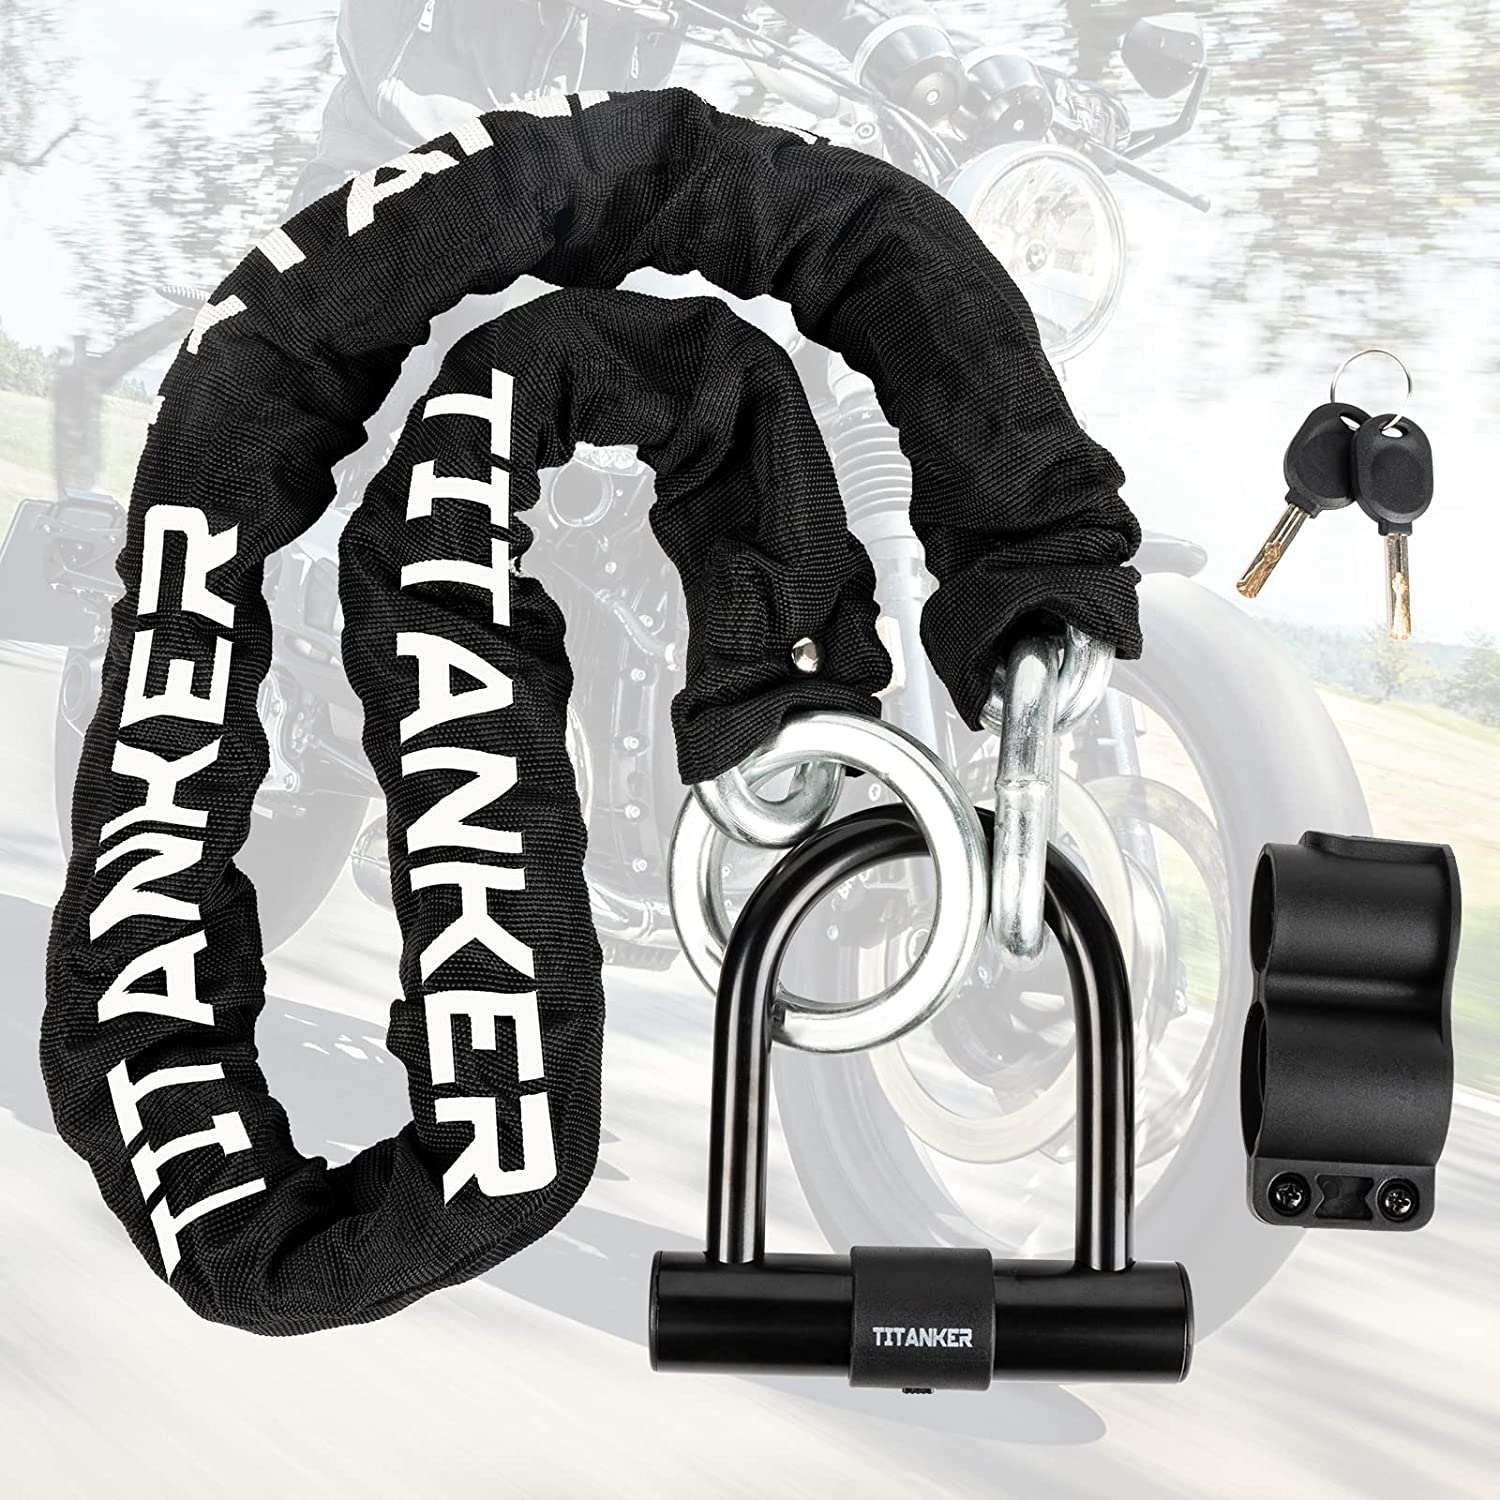 Bike Lock, Sportneer 8mm Thicker Bicycle Chain Lock Heavy Duty